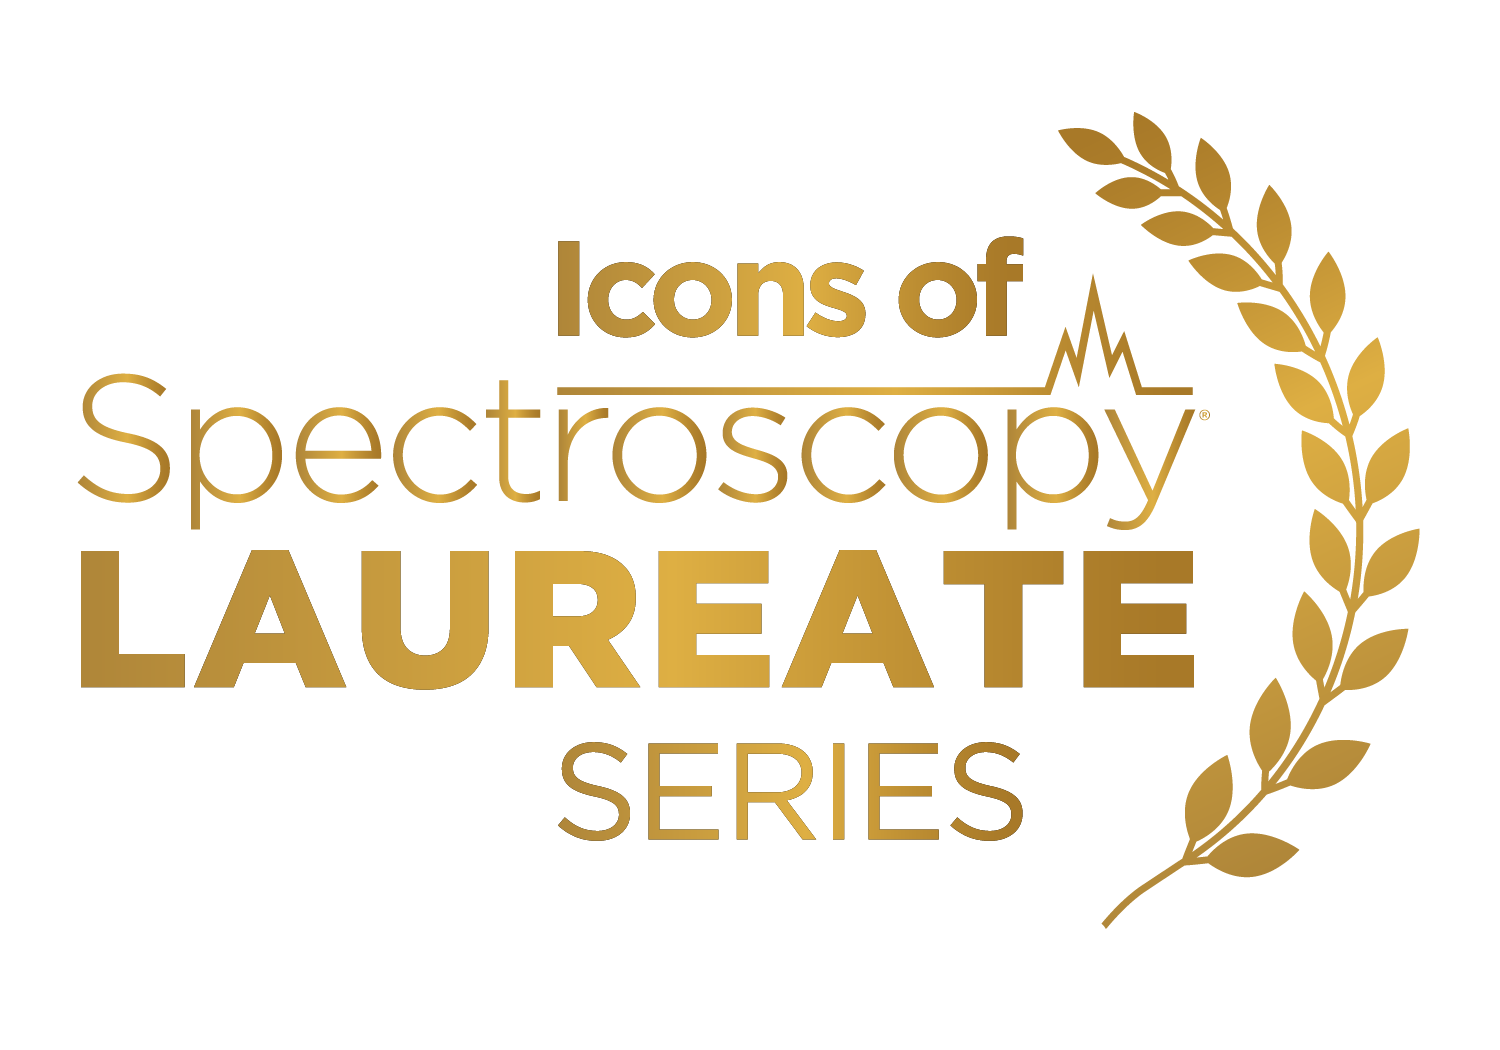 Icons of Spectroscopy Laureate Series: Eponym Spectroscopy Awards